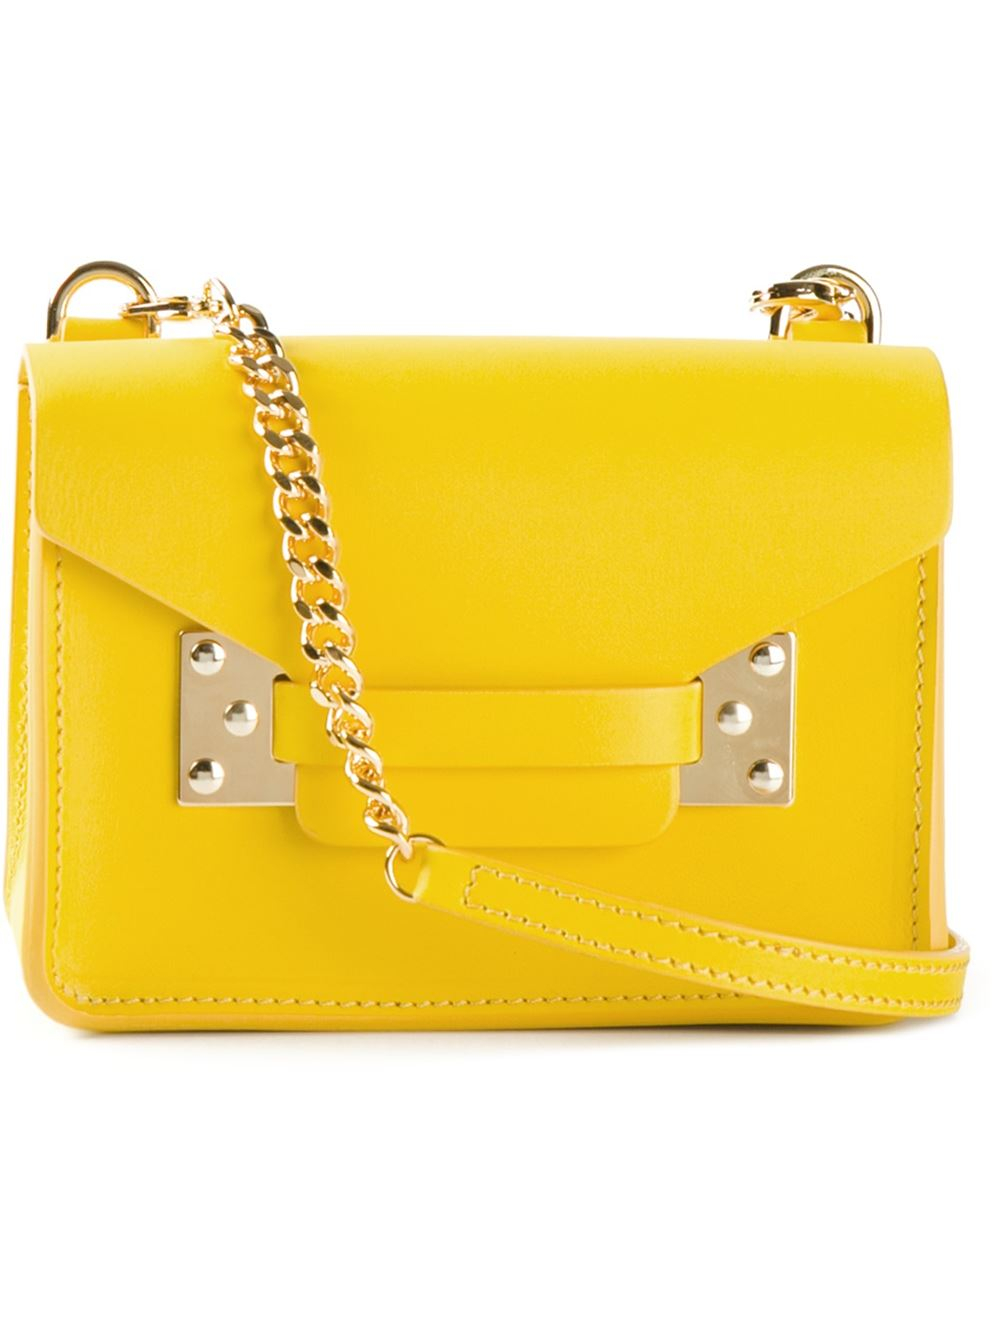 Lyst - Sophie Hulme Mini Envelope Shoulder Bag in Yellow